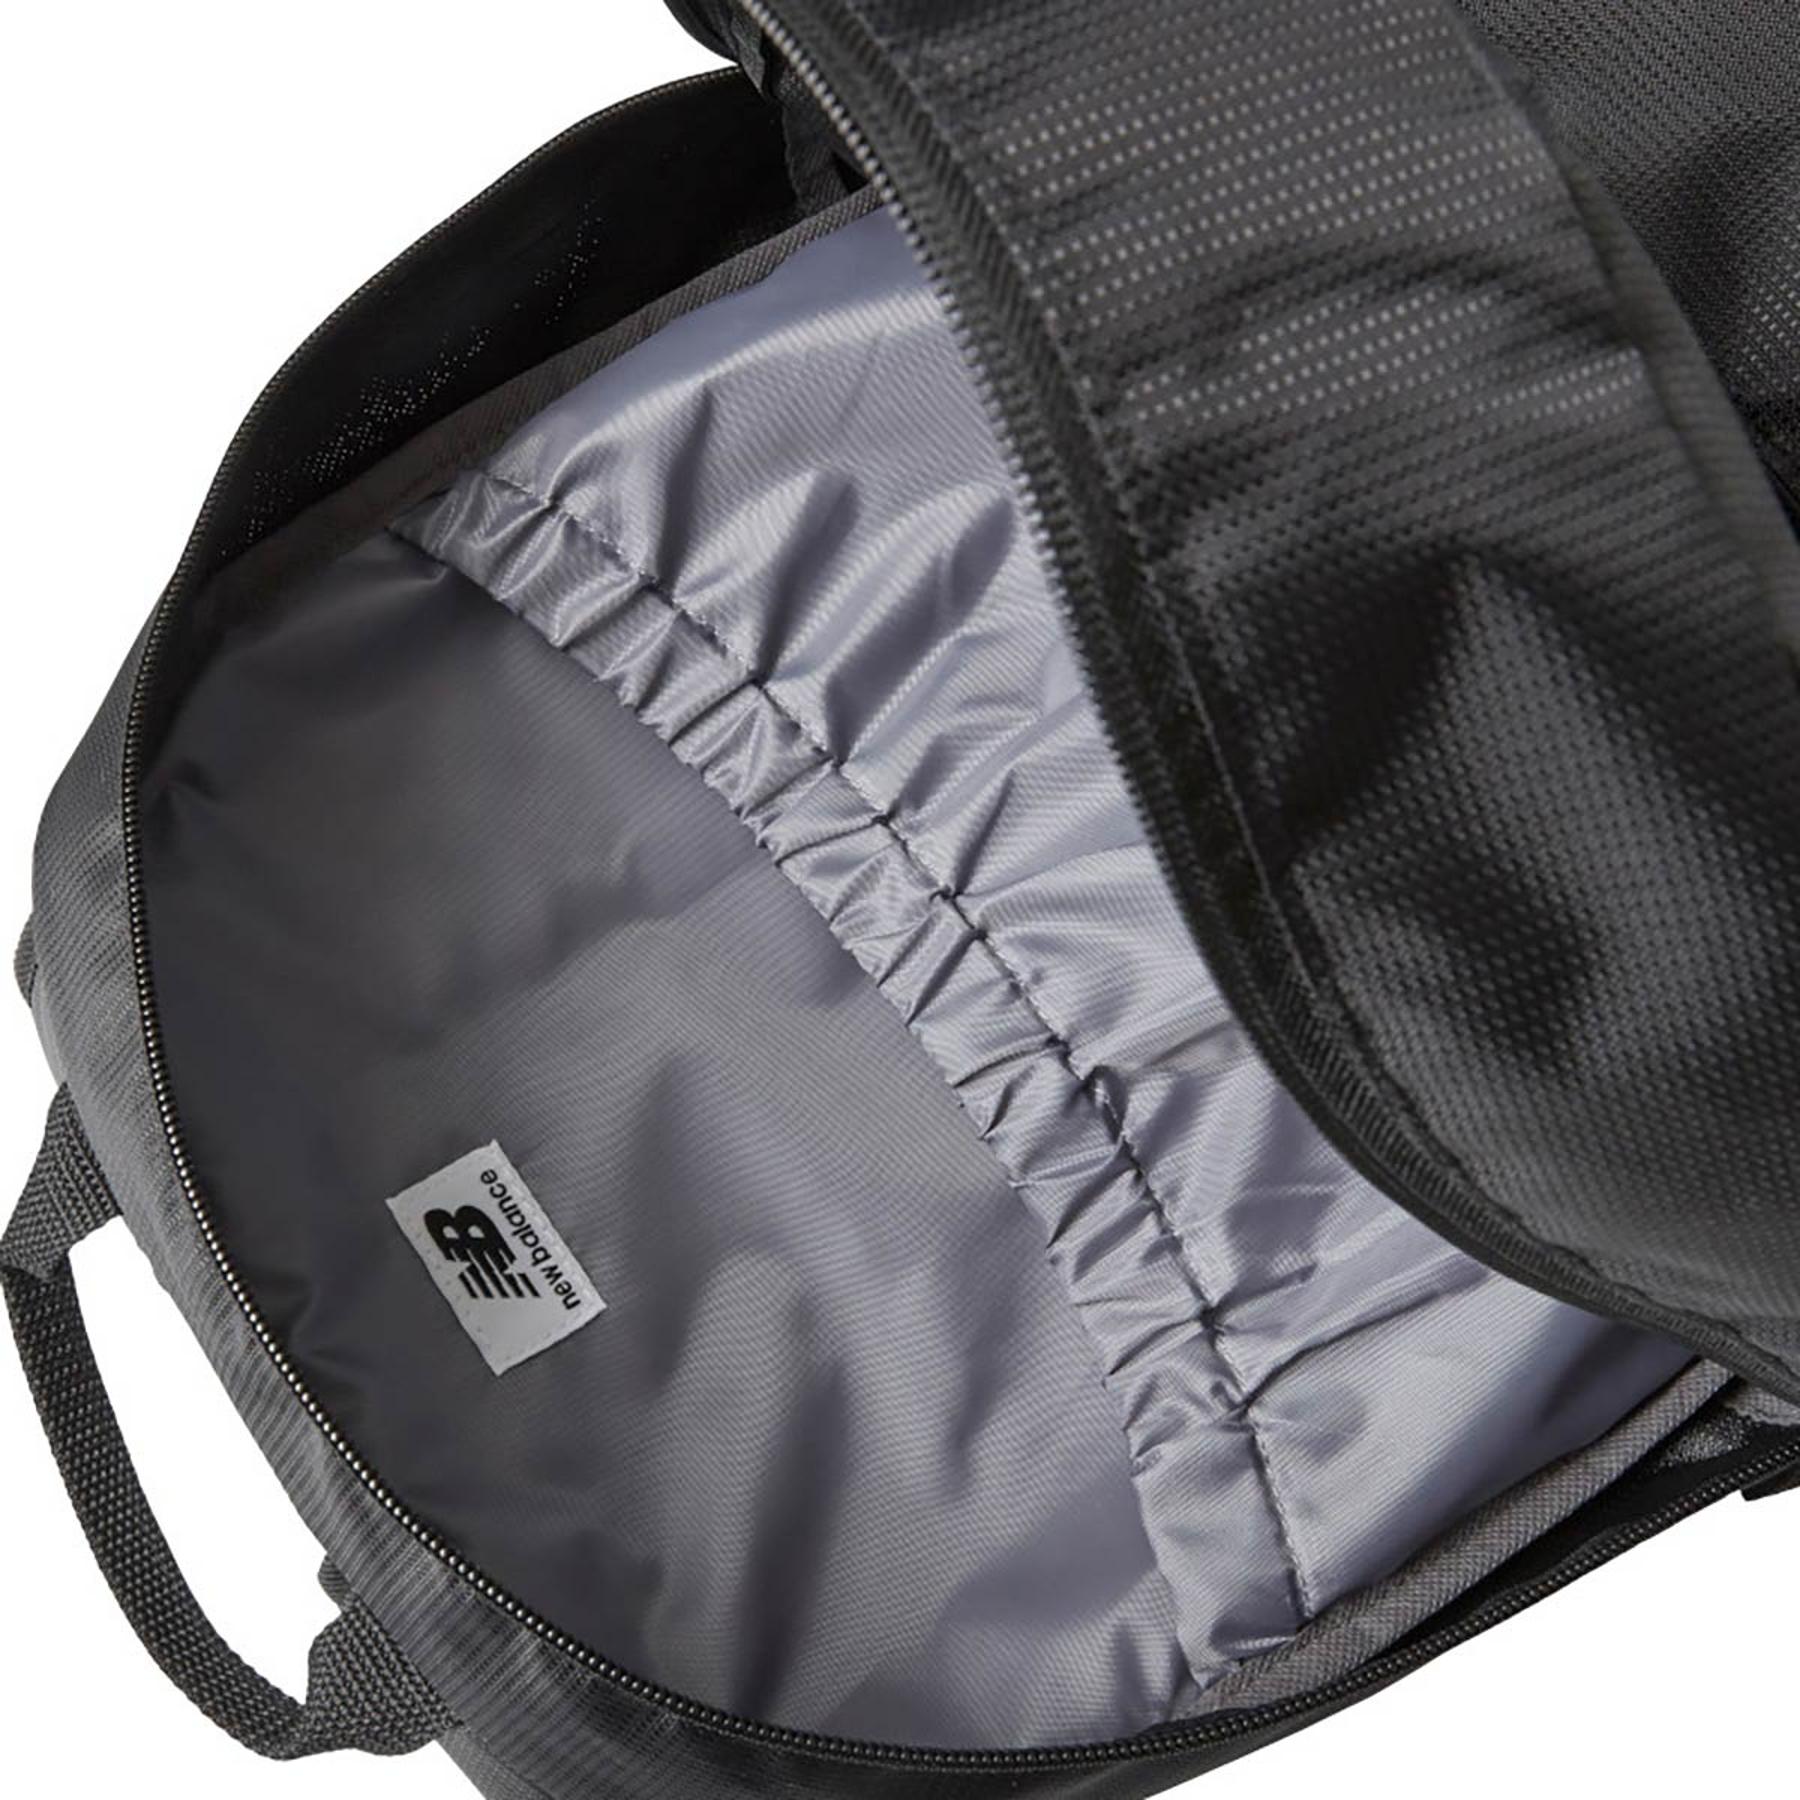 New Balance OPP Core Backpack Black